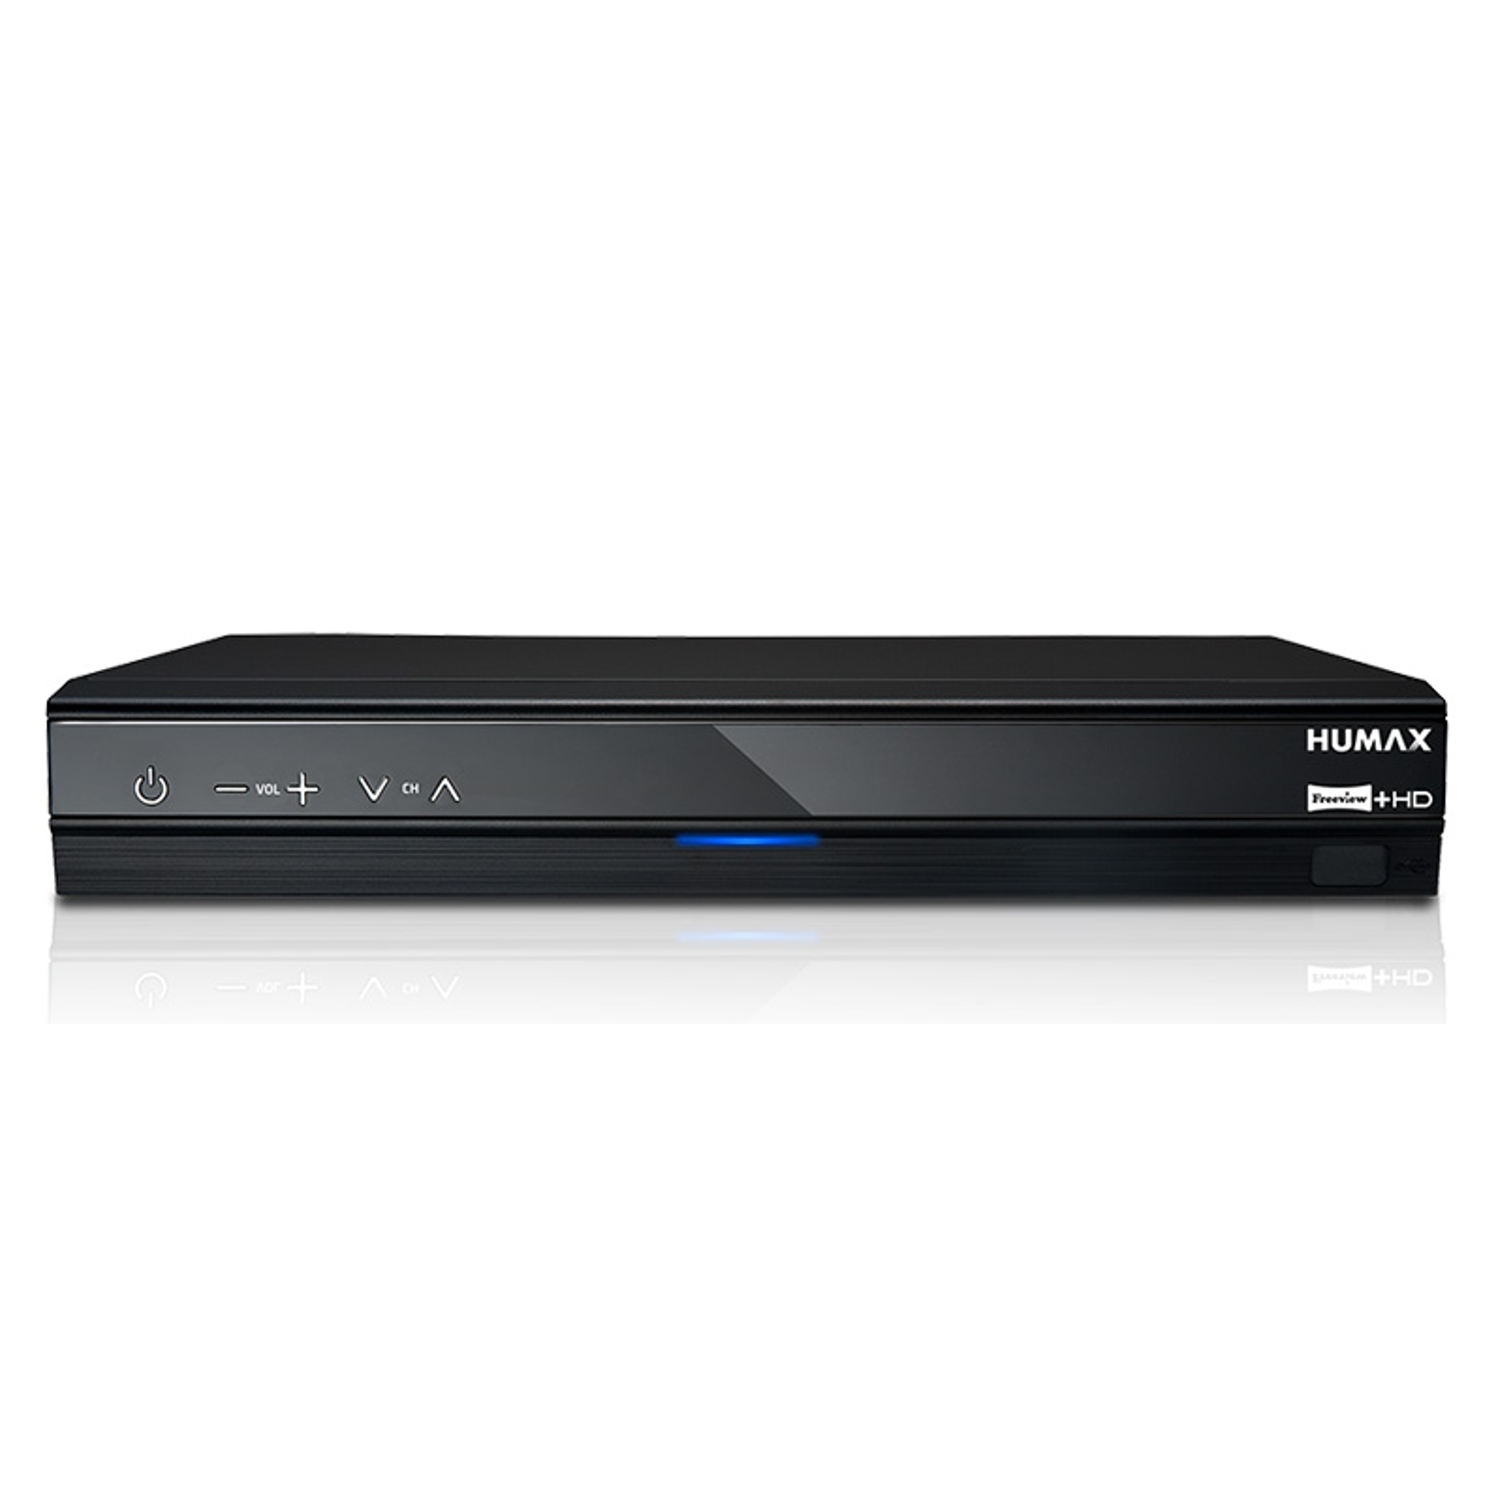 Humax HDR 1800T 320 Digital Video Recorder - 320 GB HDD -Freeview-Smart - Set Top Box- Black - 1